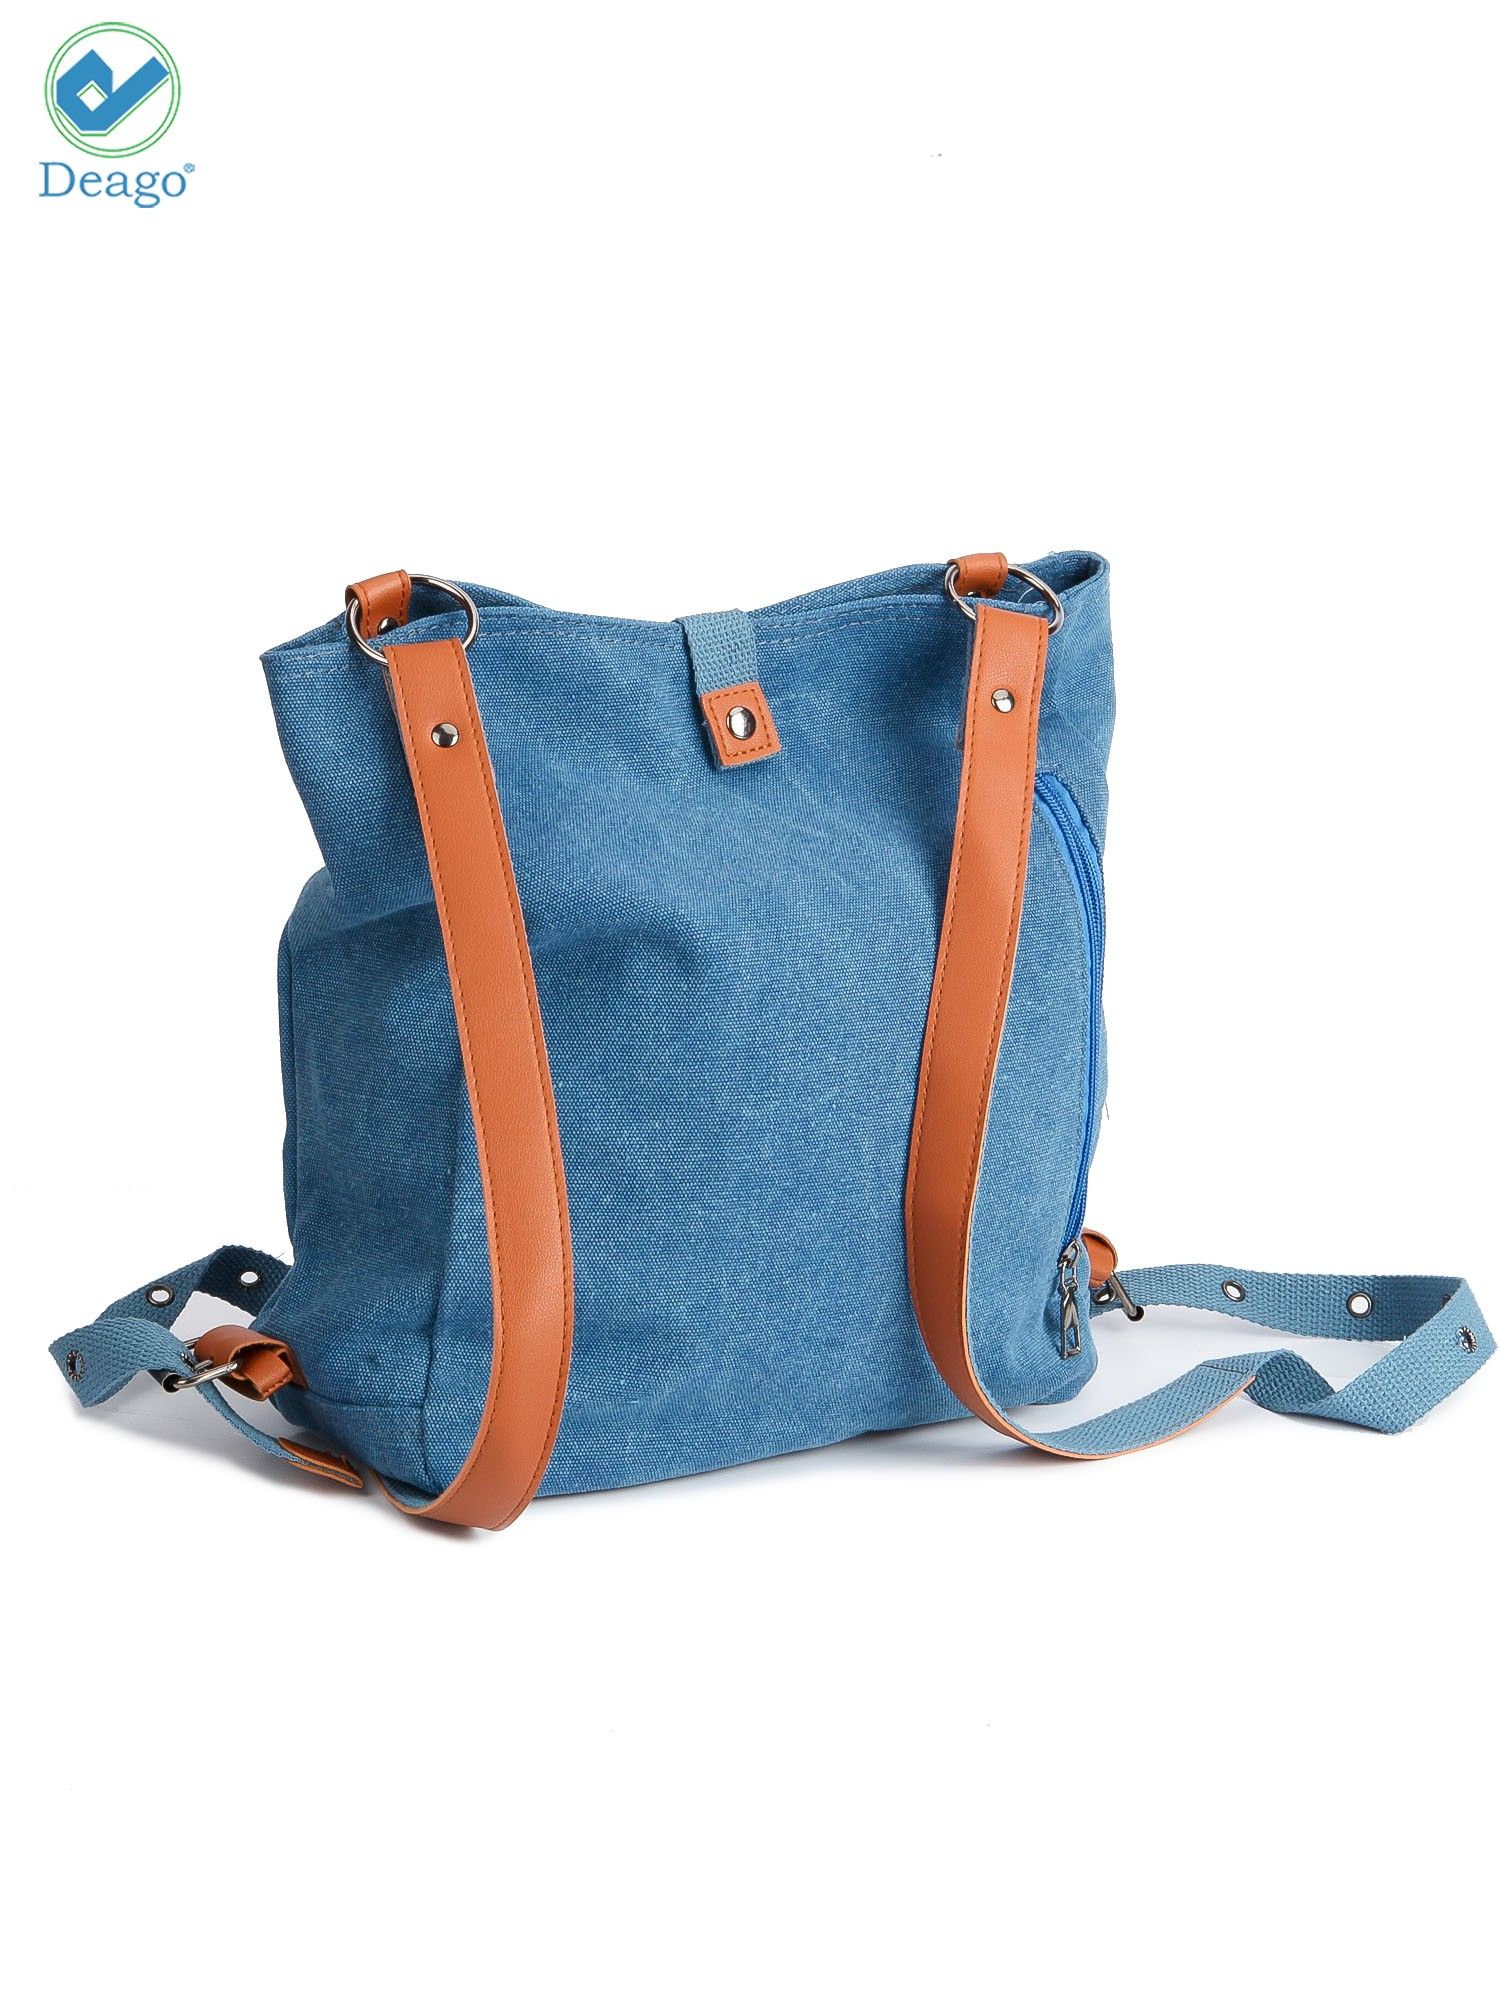 Deago Purse Handbag for Women Canvas Tote Bag Casual Shoulder Bag School Bag Rucksack Convertible Backpack (Blue) - image 4 of 10